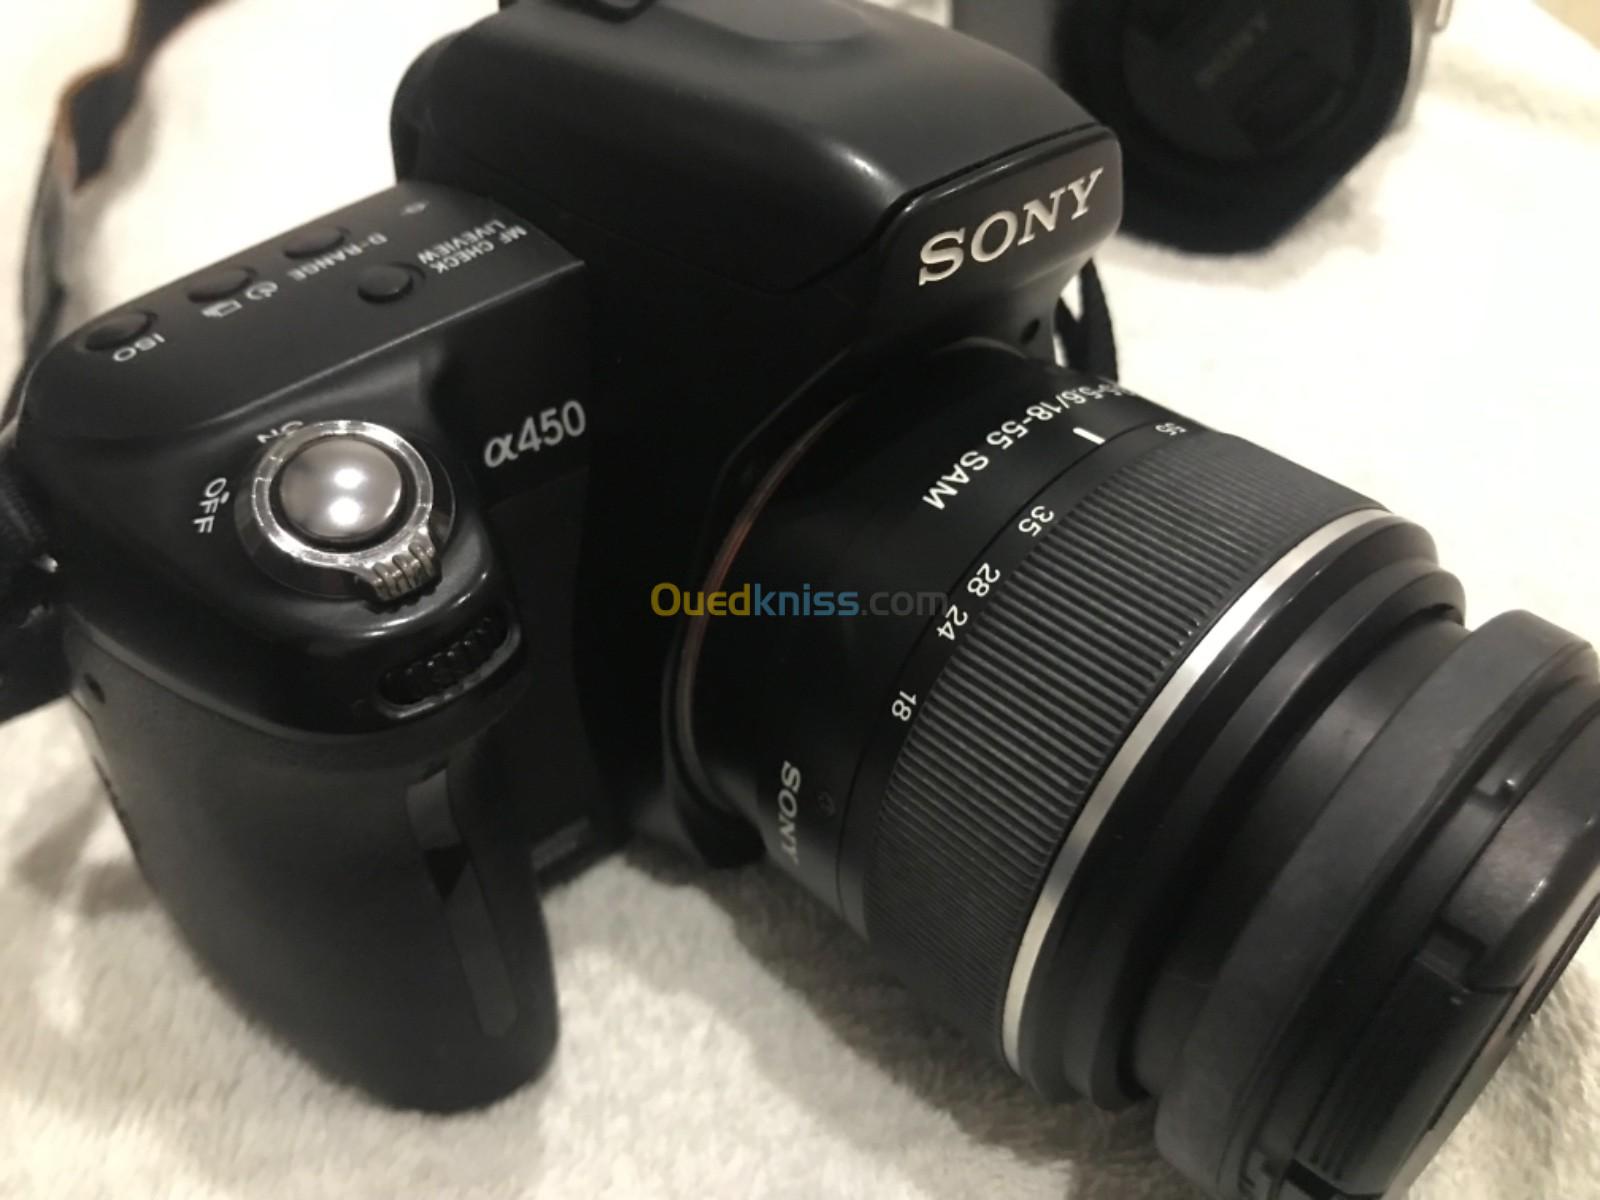 Sony alpha A450 / Sony Nex-5 / Samsung 815 pro